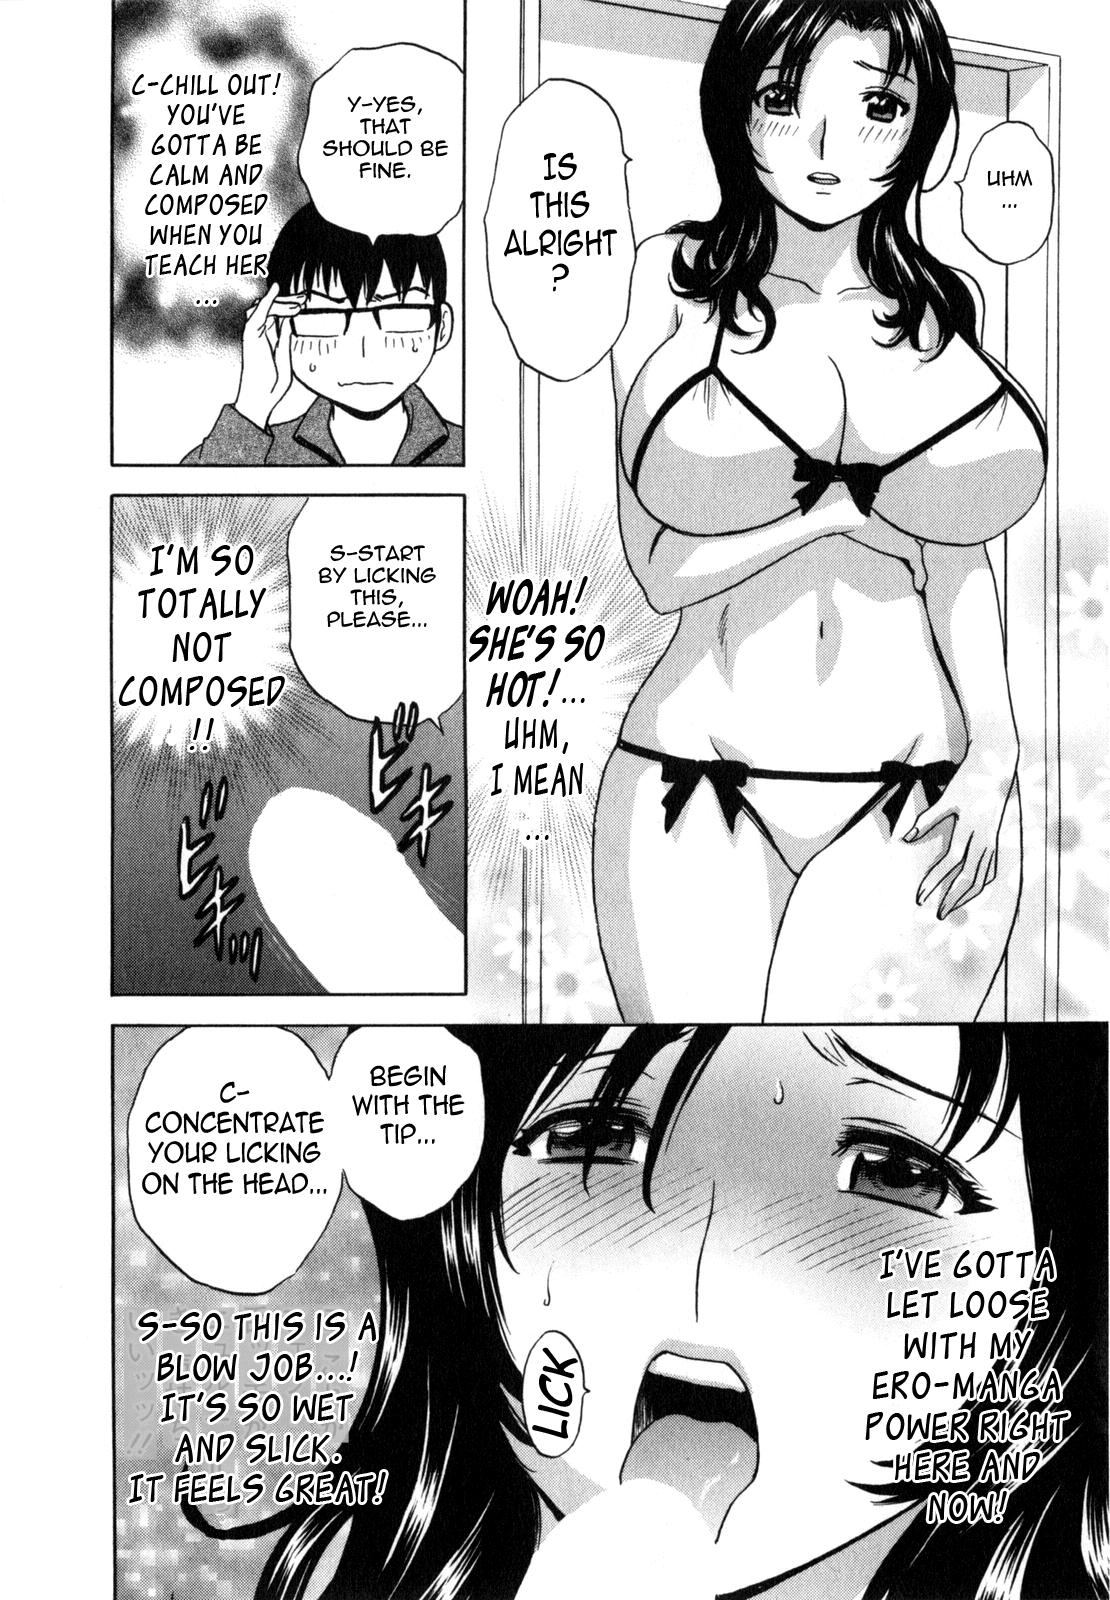 [Hidemaru] Life with Married Women Just Like a Manga 1 - Ch. 1-2 [English] {Tadanohito} 16